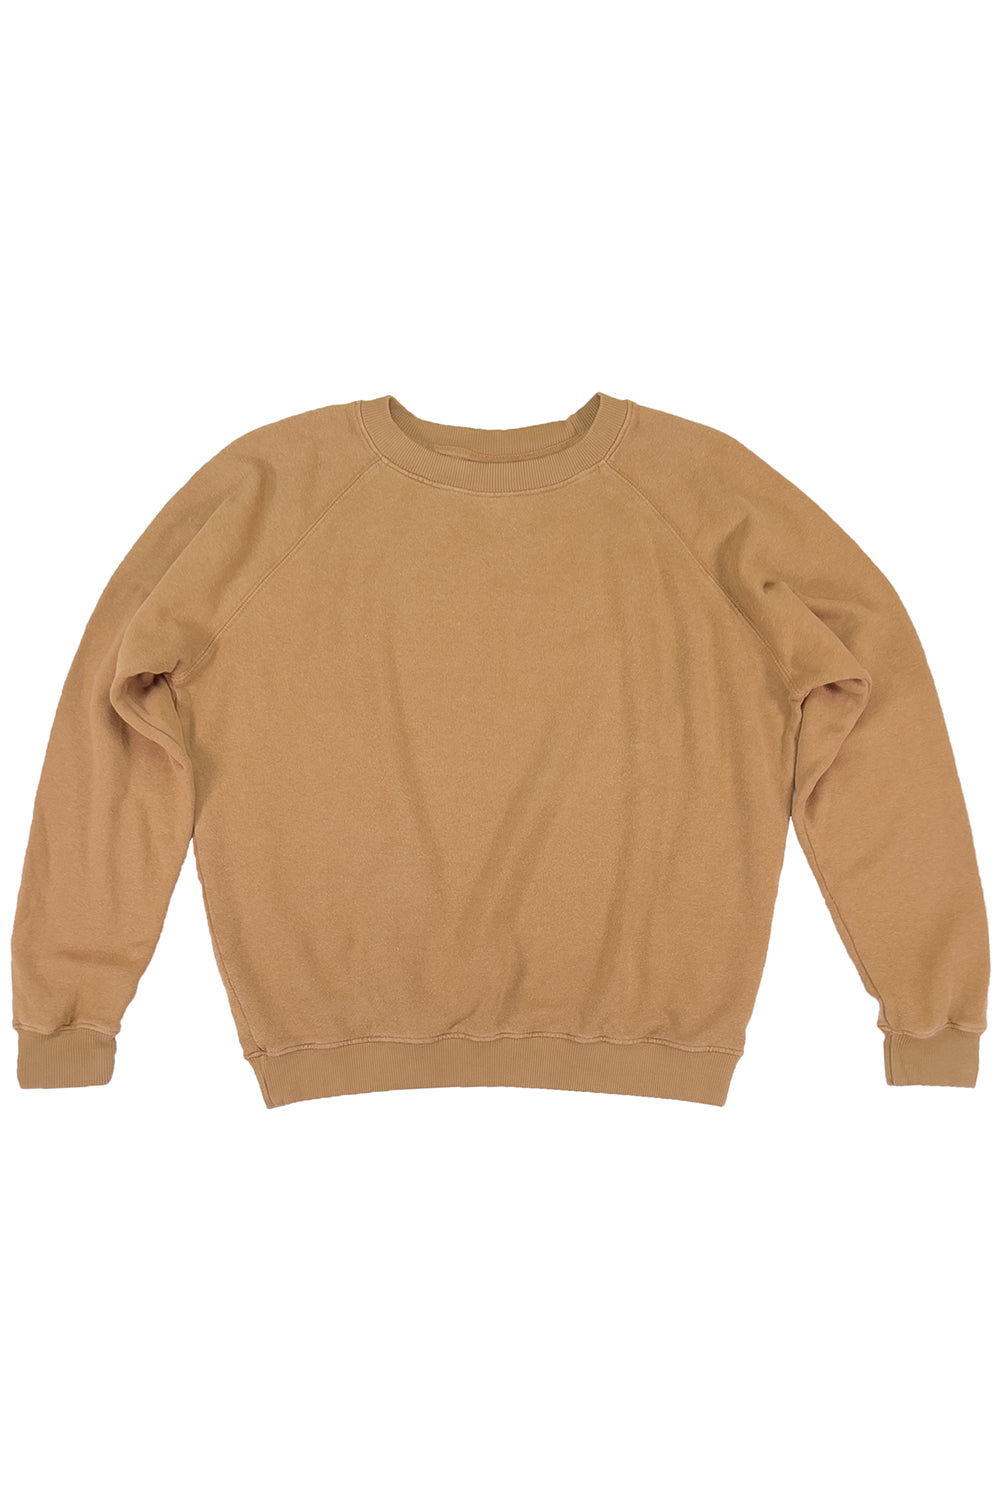 Bonfire Raglan Sweatshirt | Jungmaven Hemp Clothing & Accessories / Color: Coyote